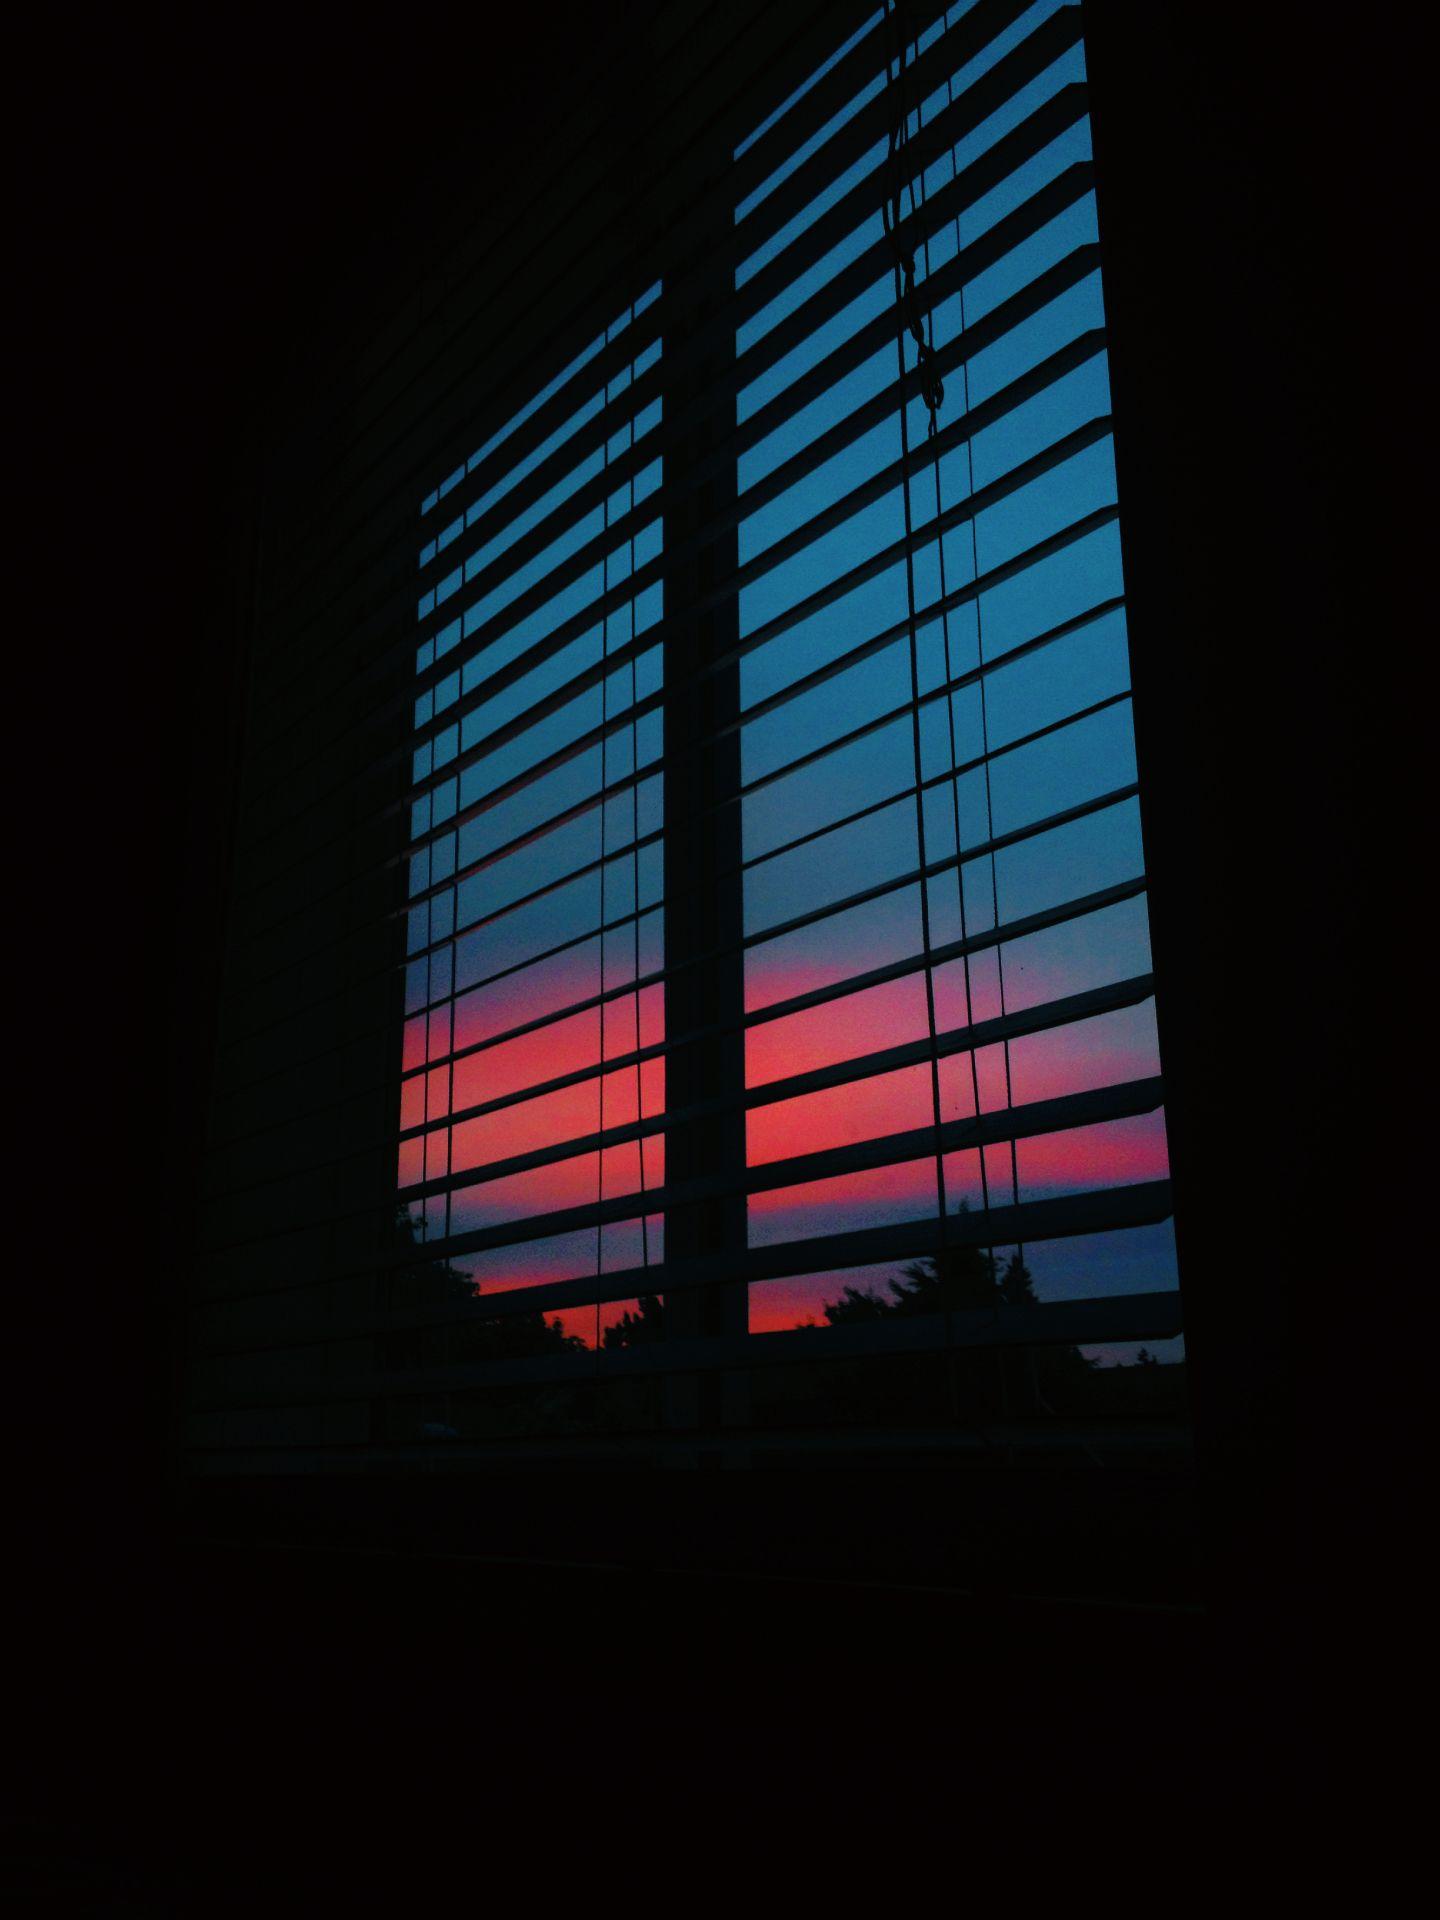 Sunset gazing through my window